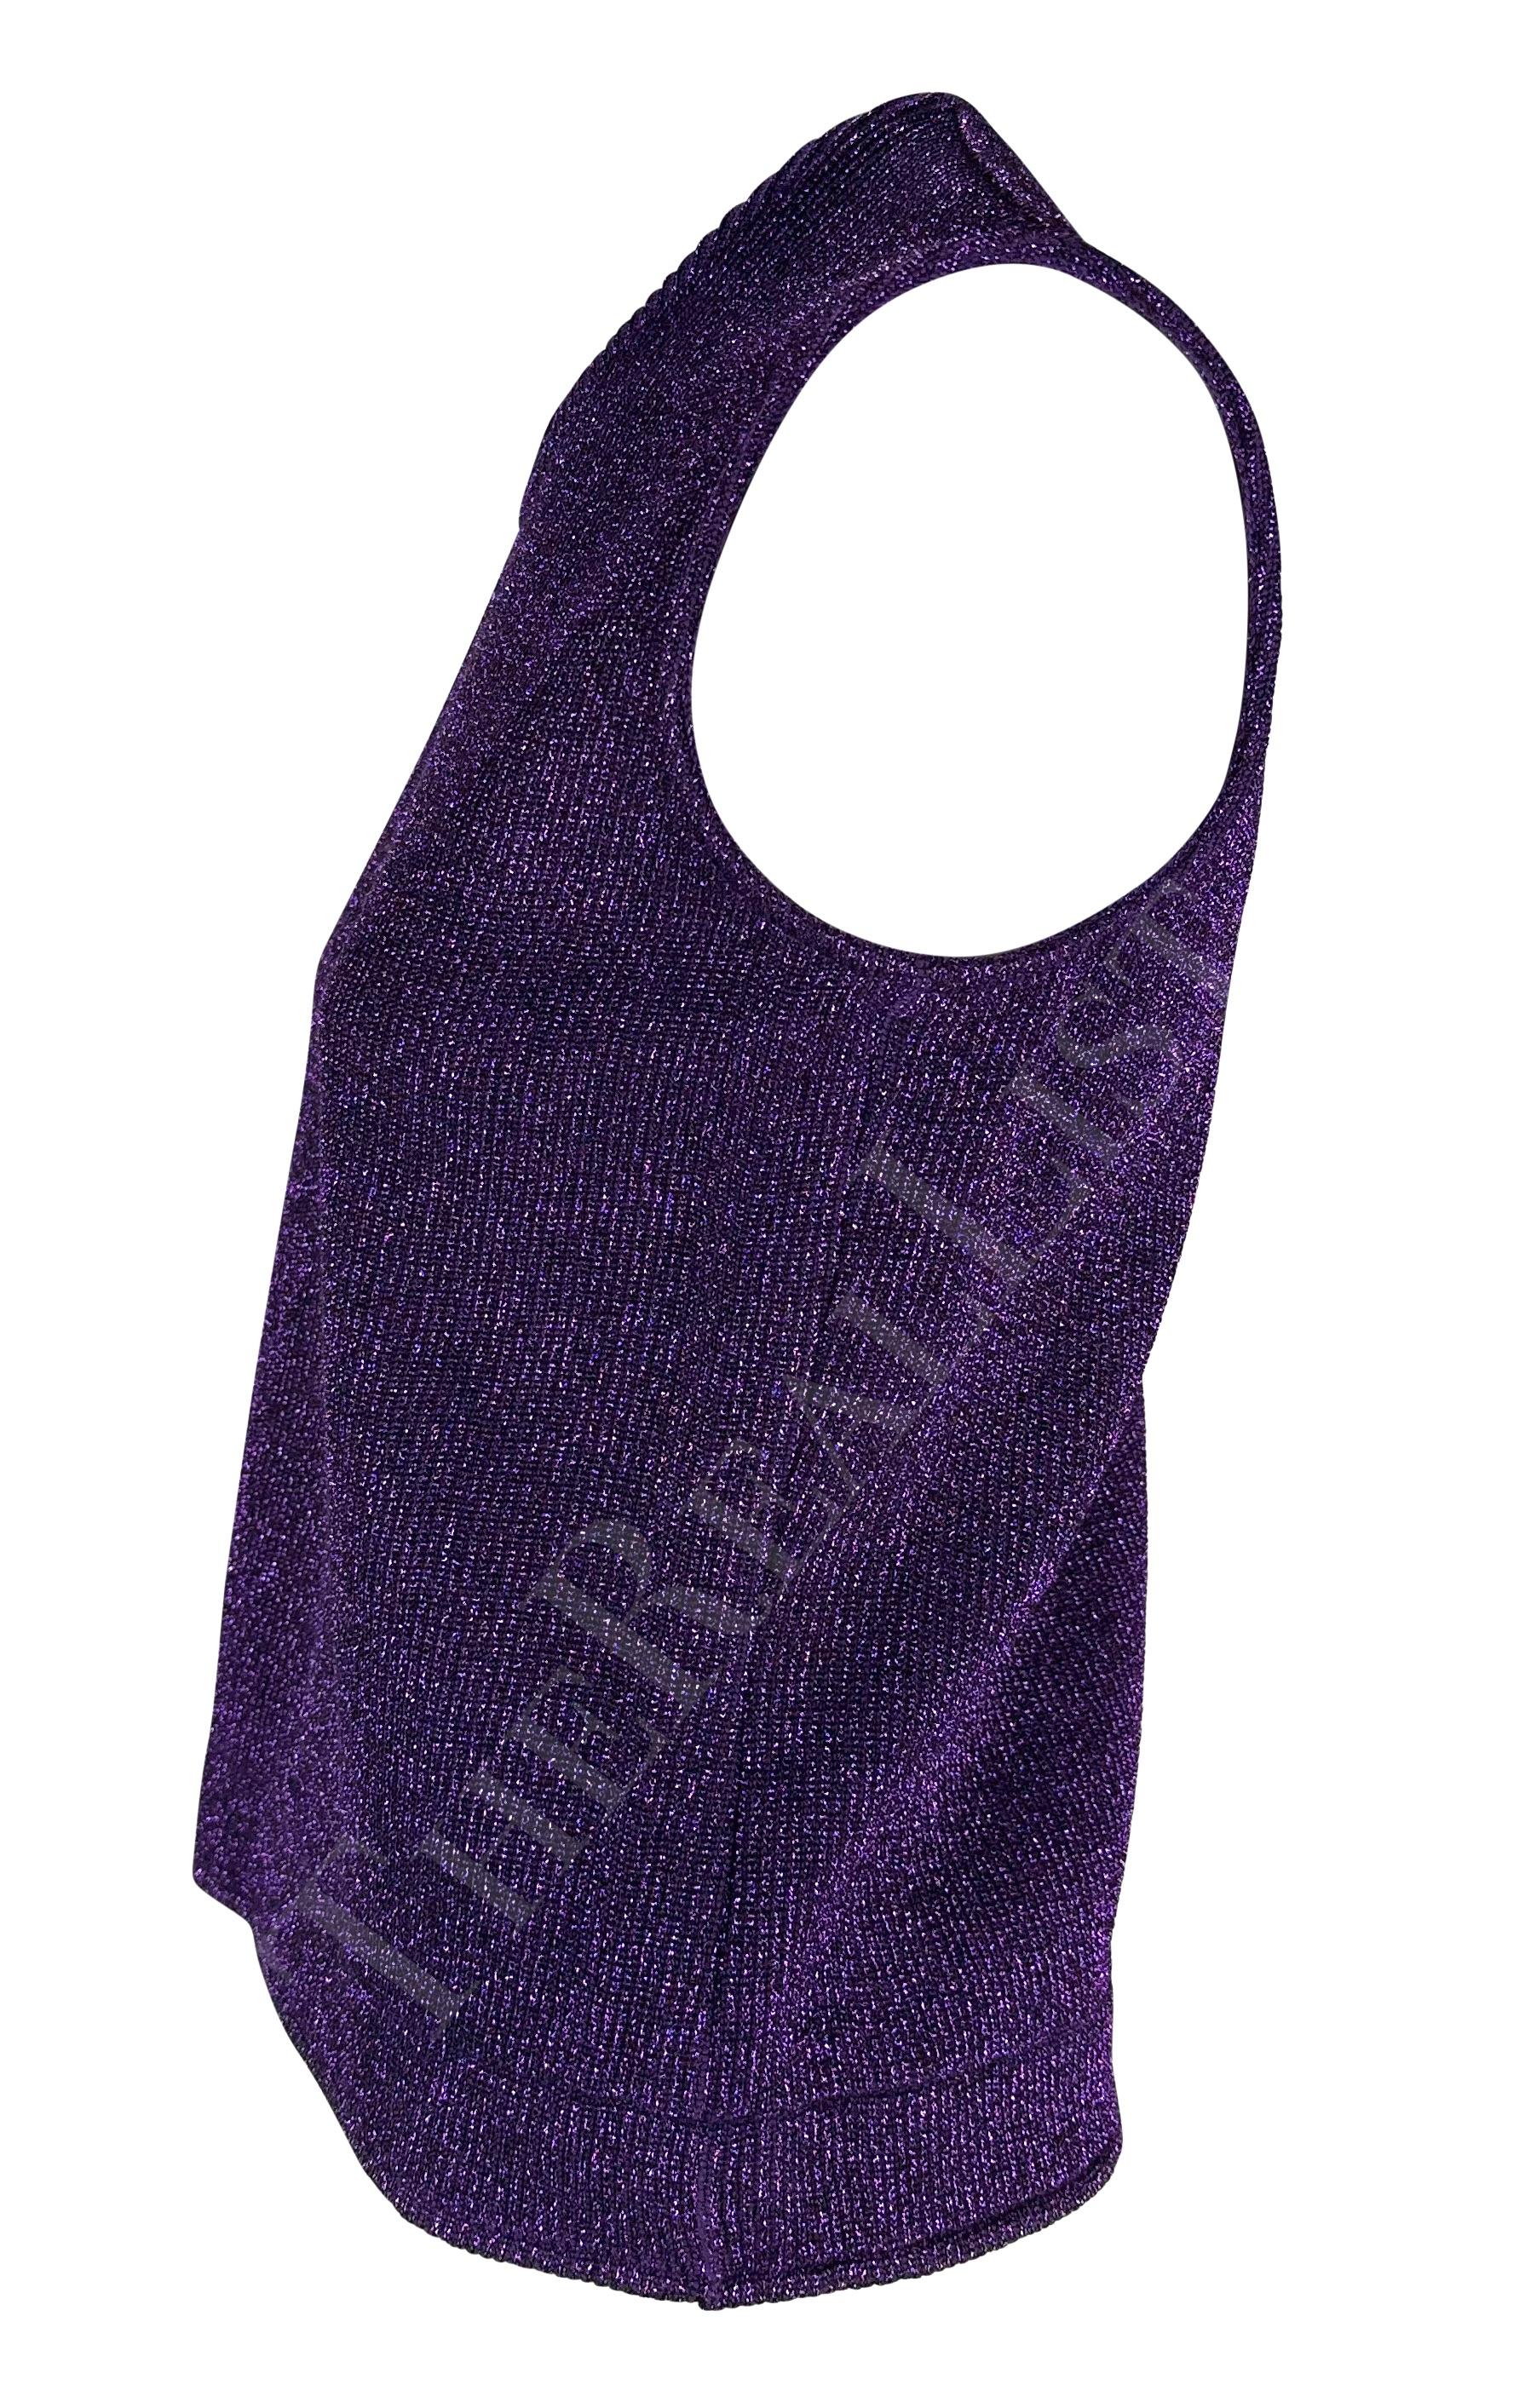 F/W 1996 Salvatore Ferragamo Purple Metallic Knit Sleeveless Top For Sale 1